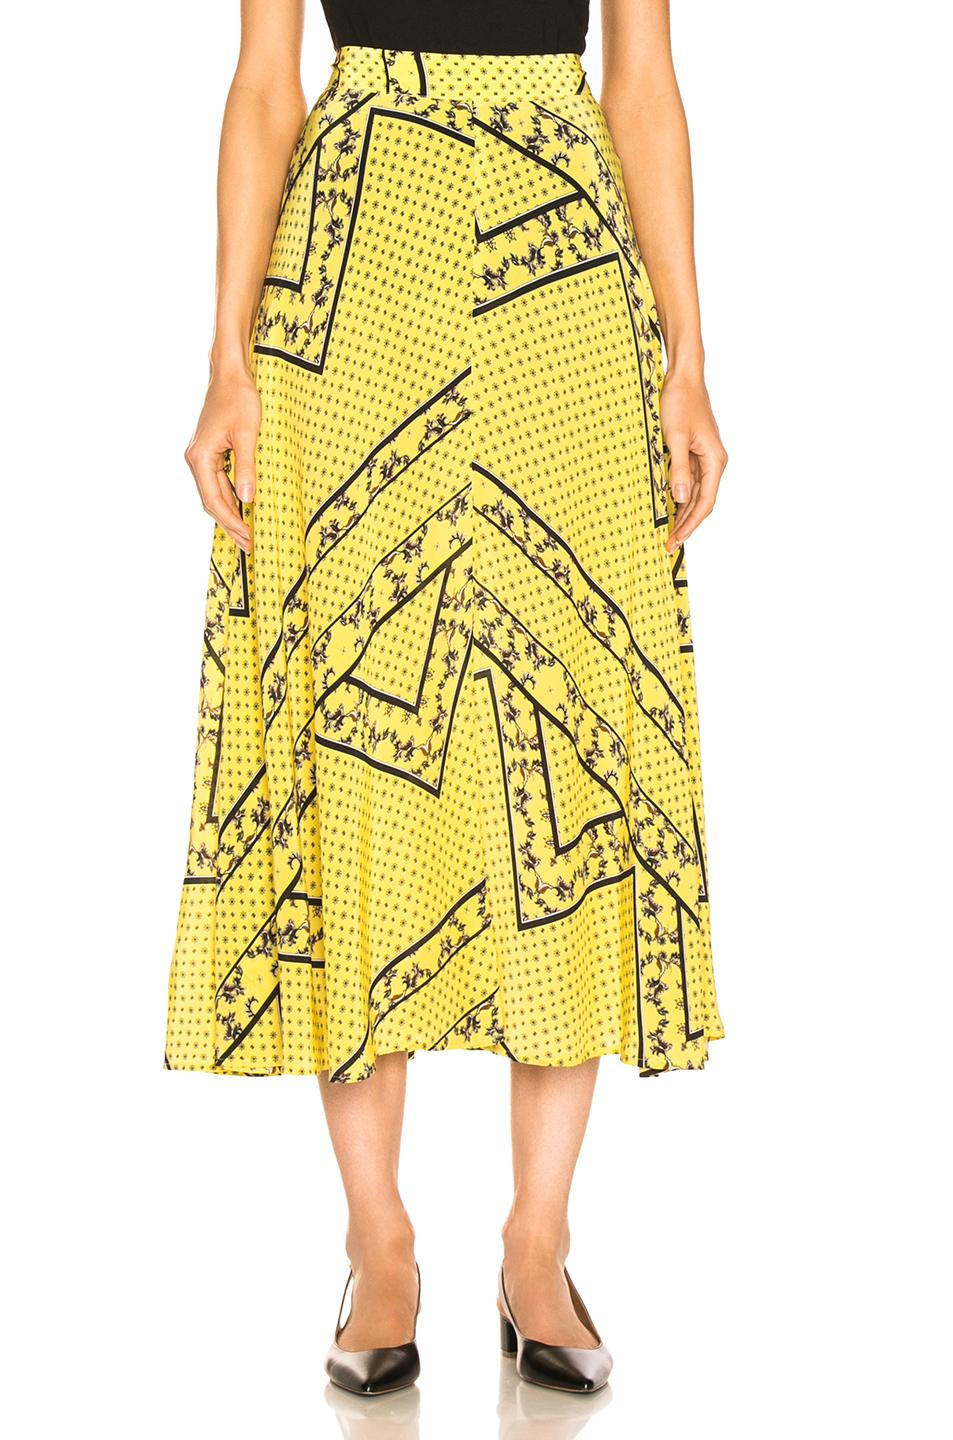 Ganni Silk Mix Skirt in Yellow/Print (Yellow) - Lyst